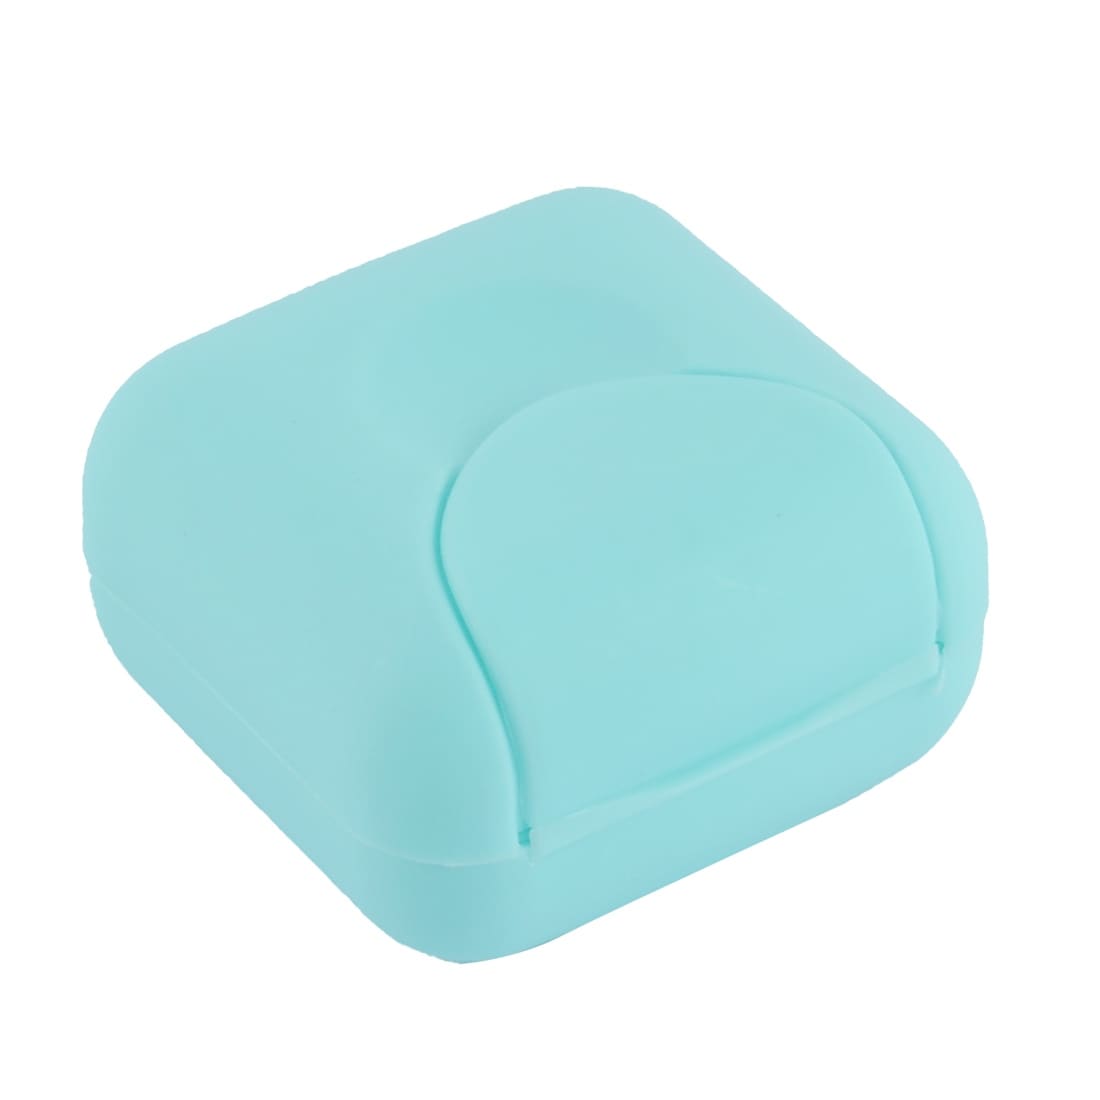 https://ak1.ostkcdn.com/images/products/is/images/direct/44a7820984517478e6d49562d3c7ba56e7afd74a/Plastic-Houseware-Travel-Mini-Soap-Dish-Box-Holder-Case-Container.jpg